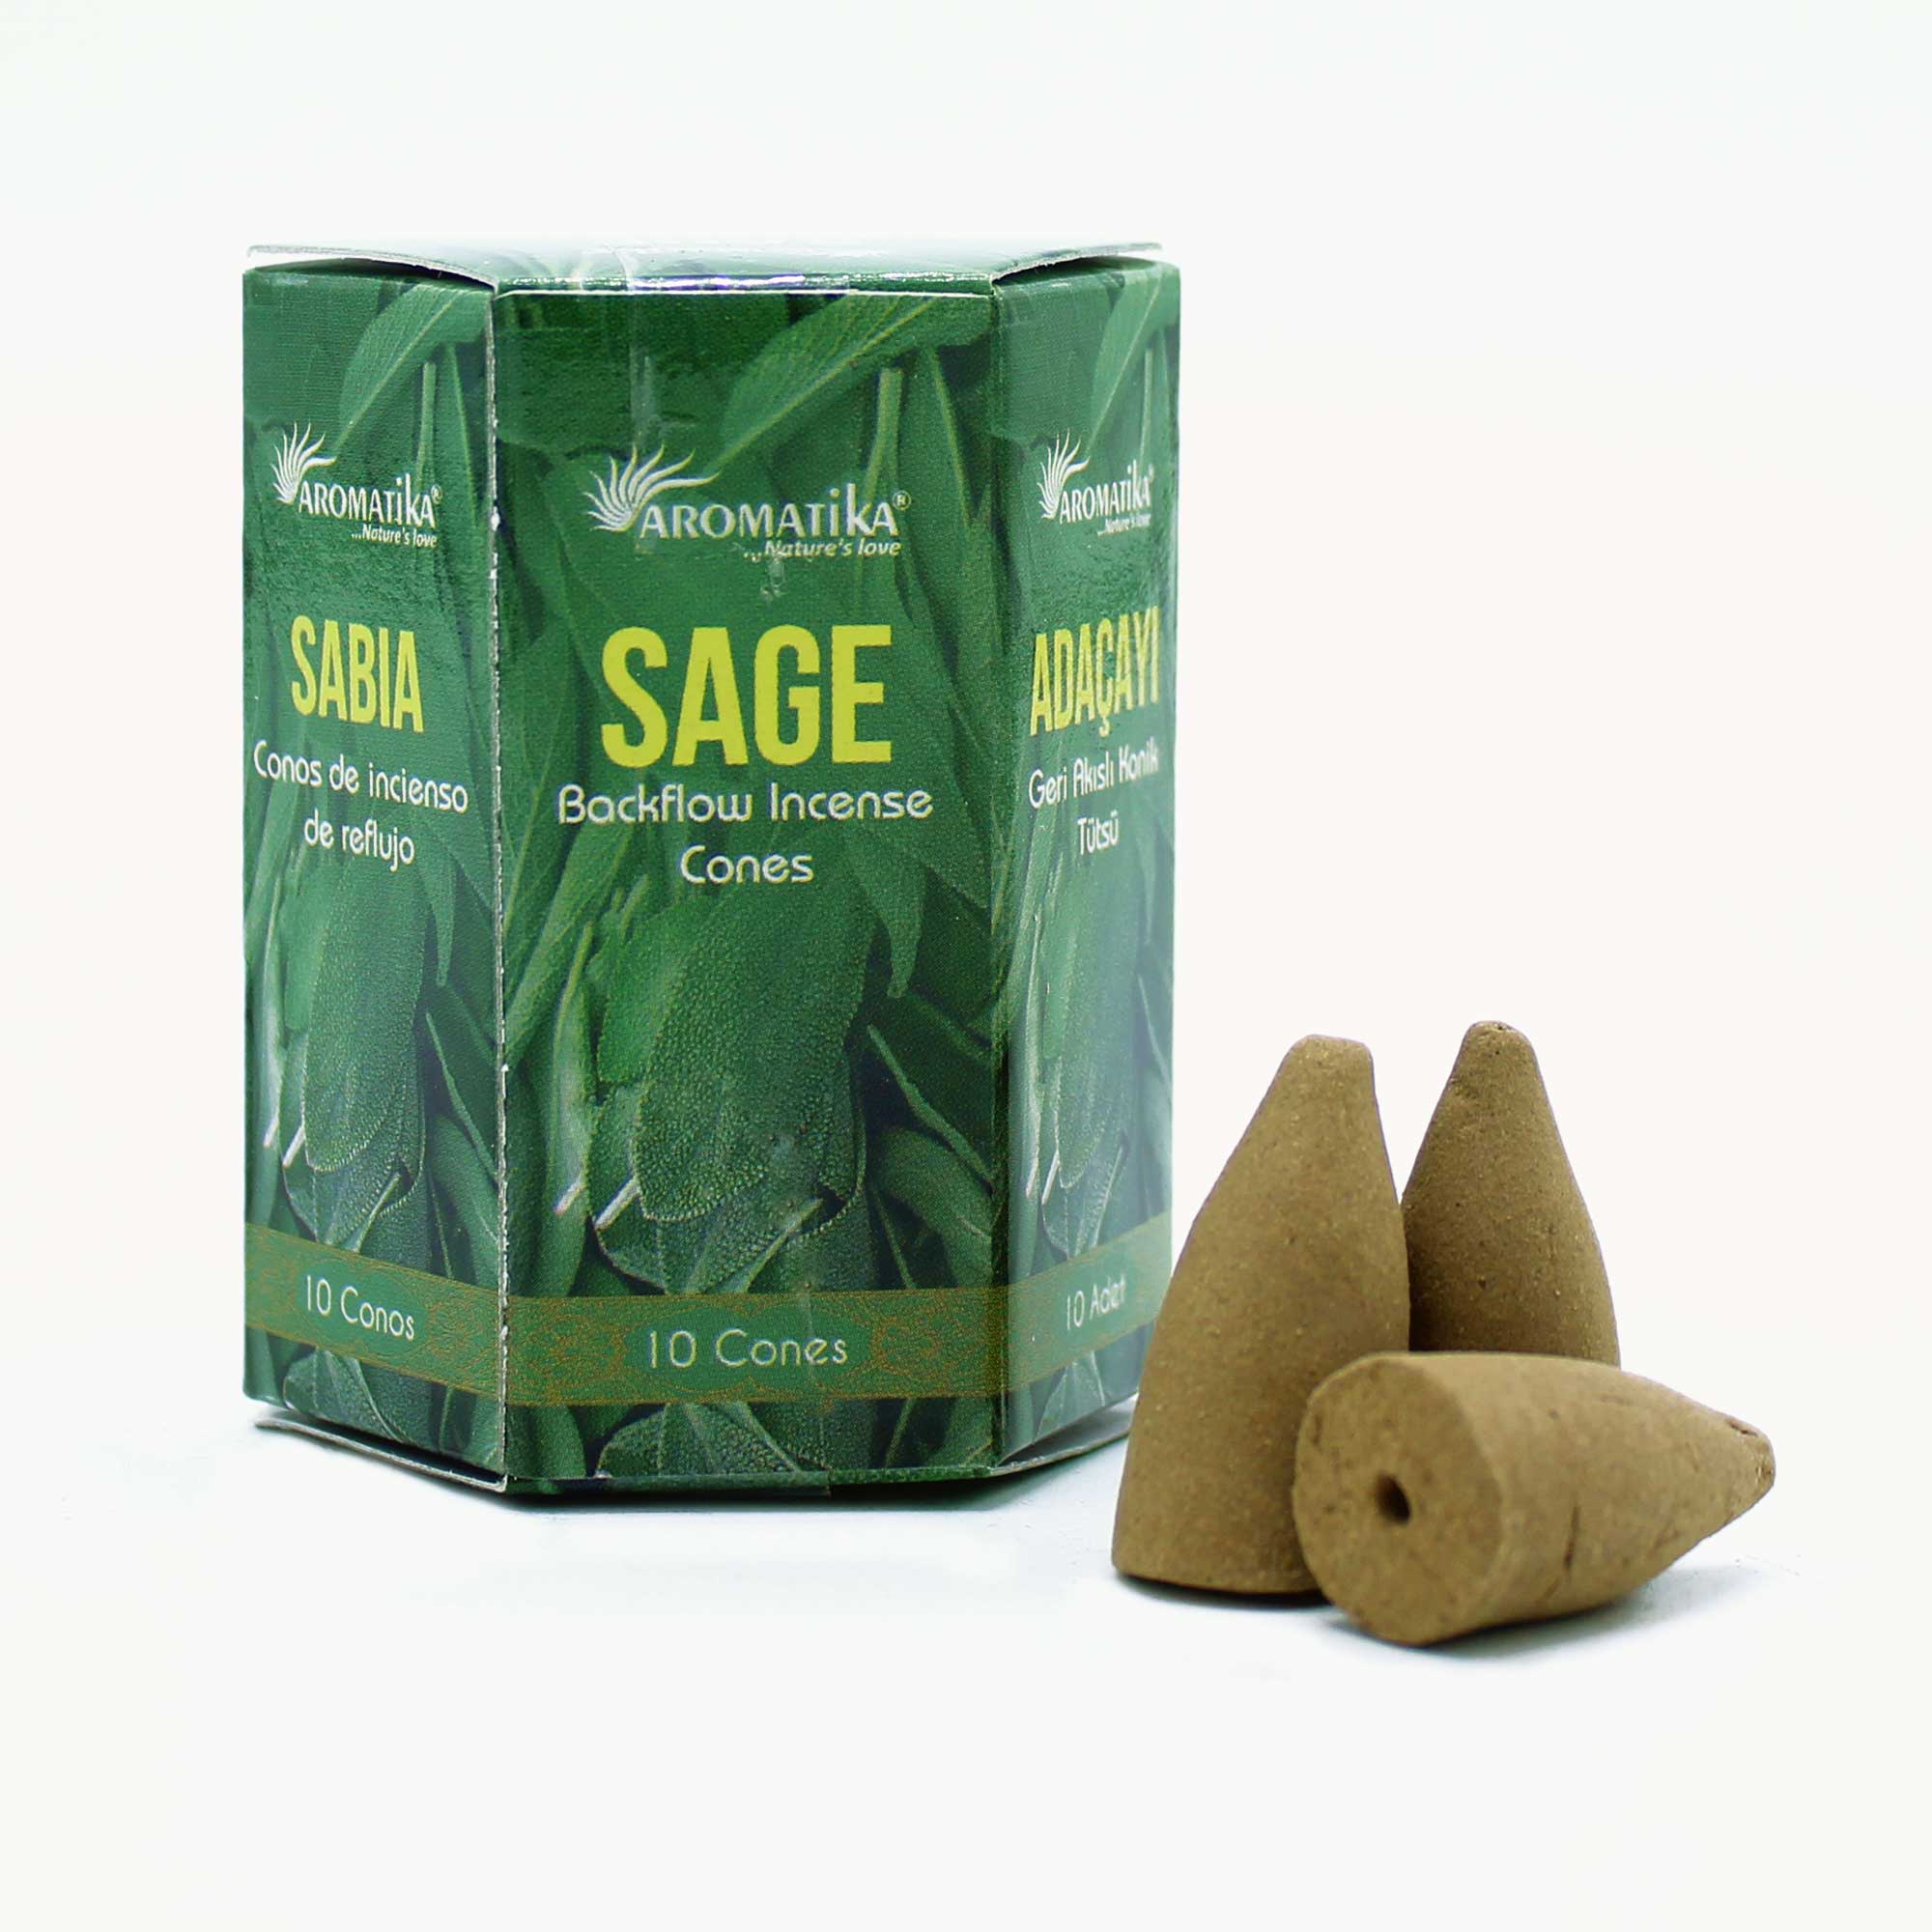 View Pack of 10 Masala Backf10 Incense Sage information